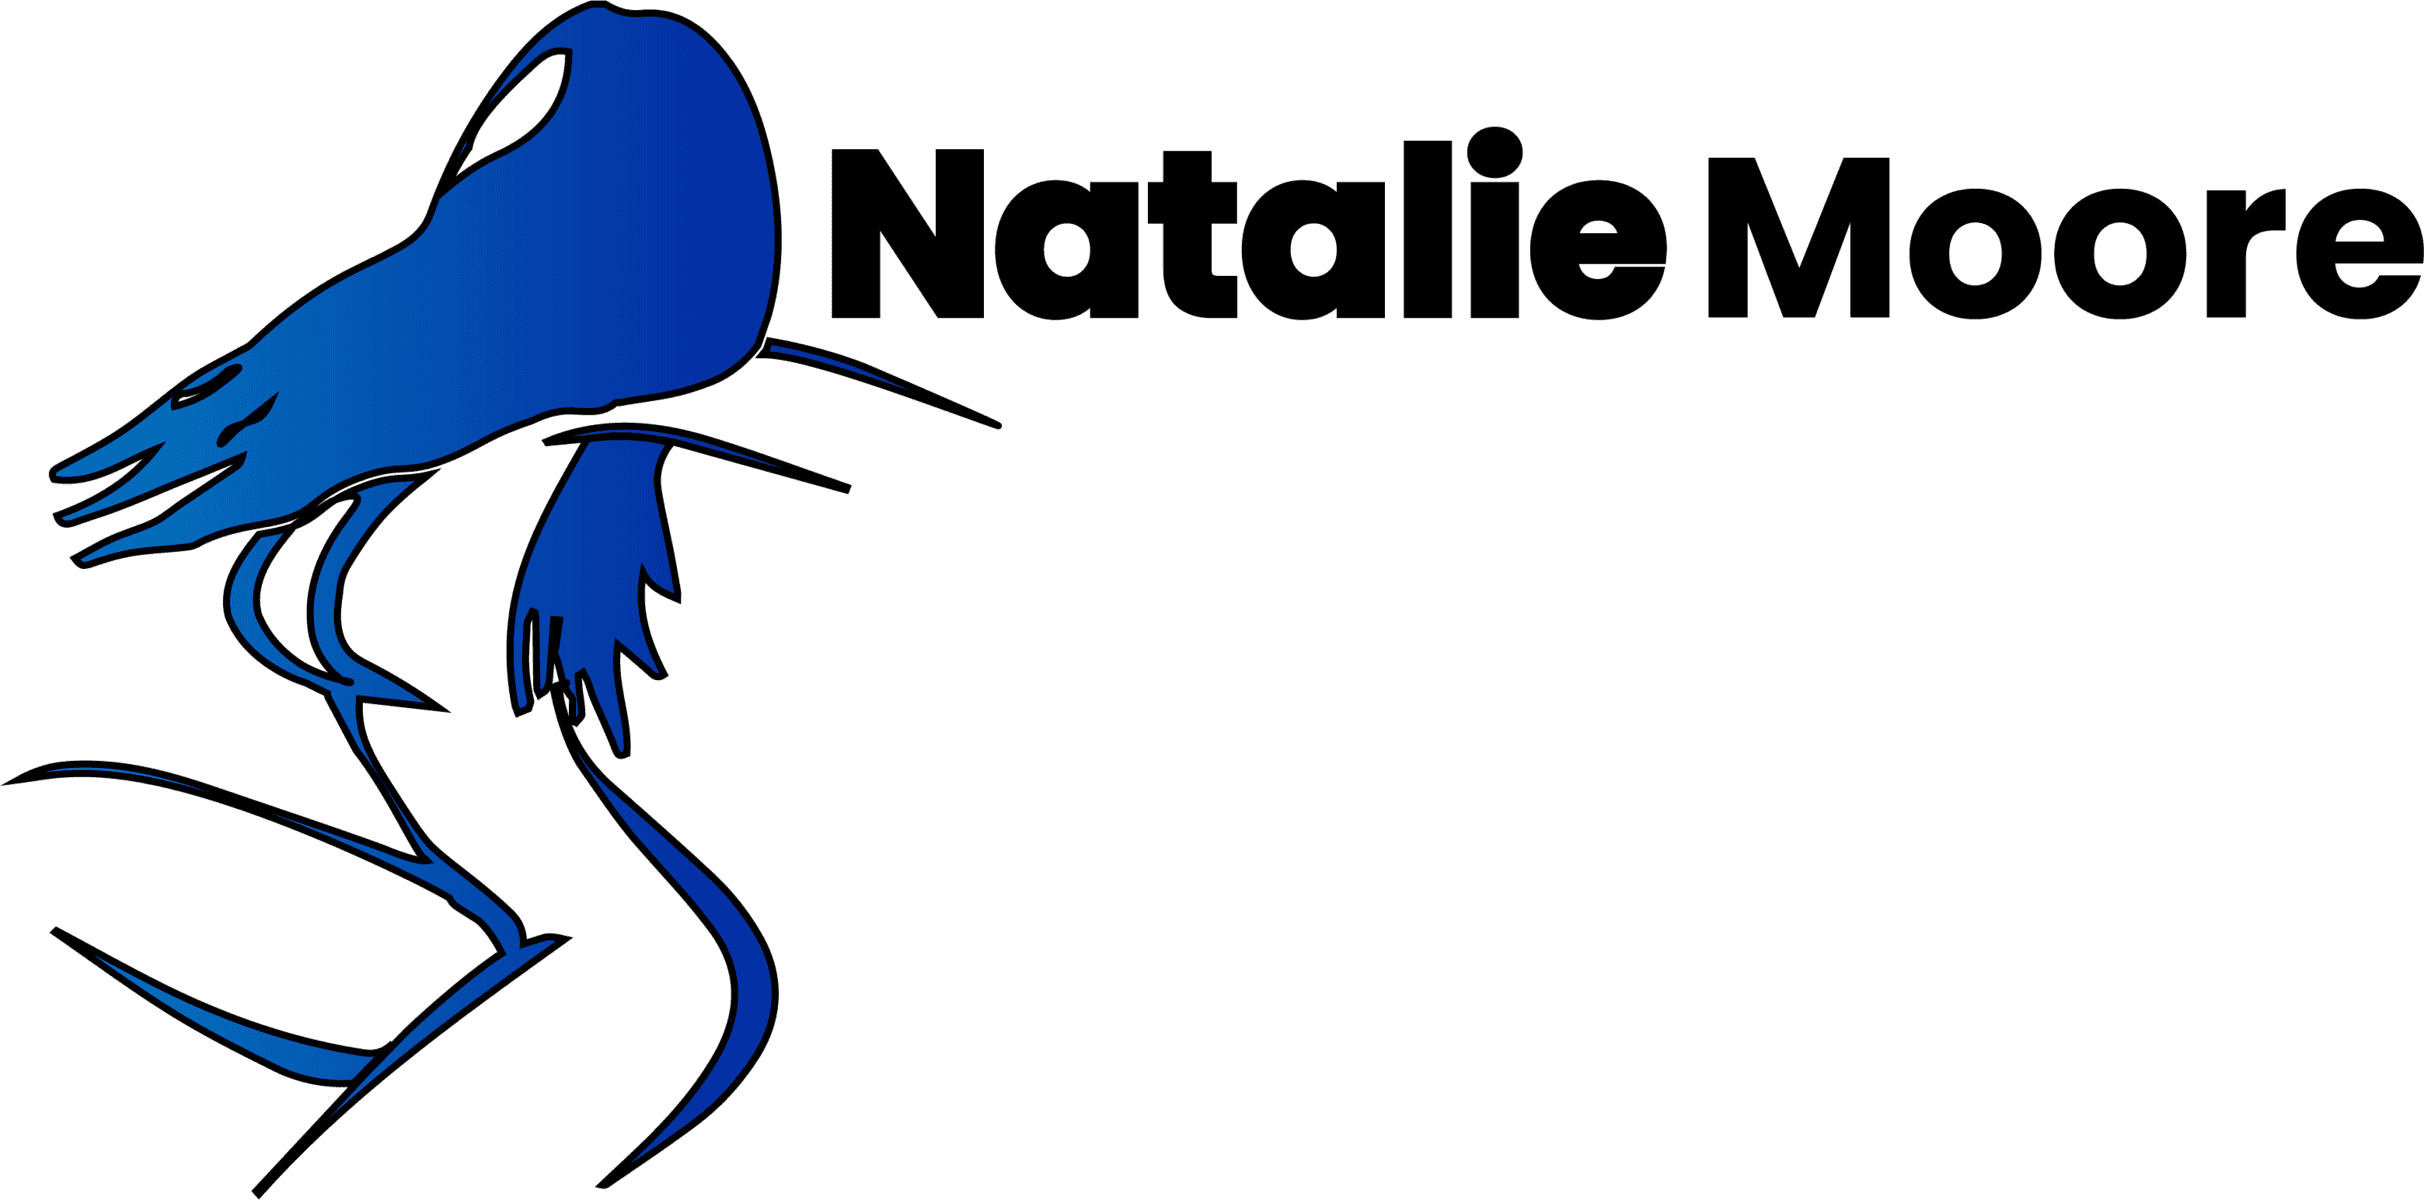 Natalie Moore - escort natalie moore brandasset (7) - Brisbane Escort